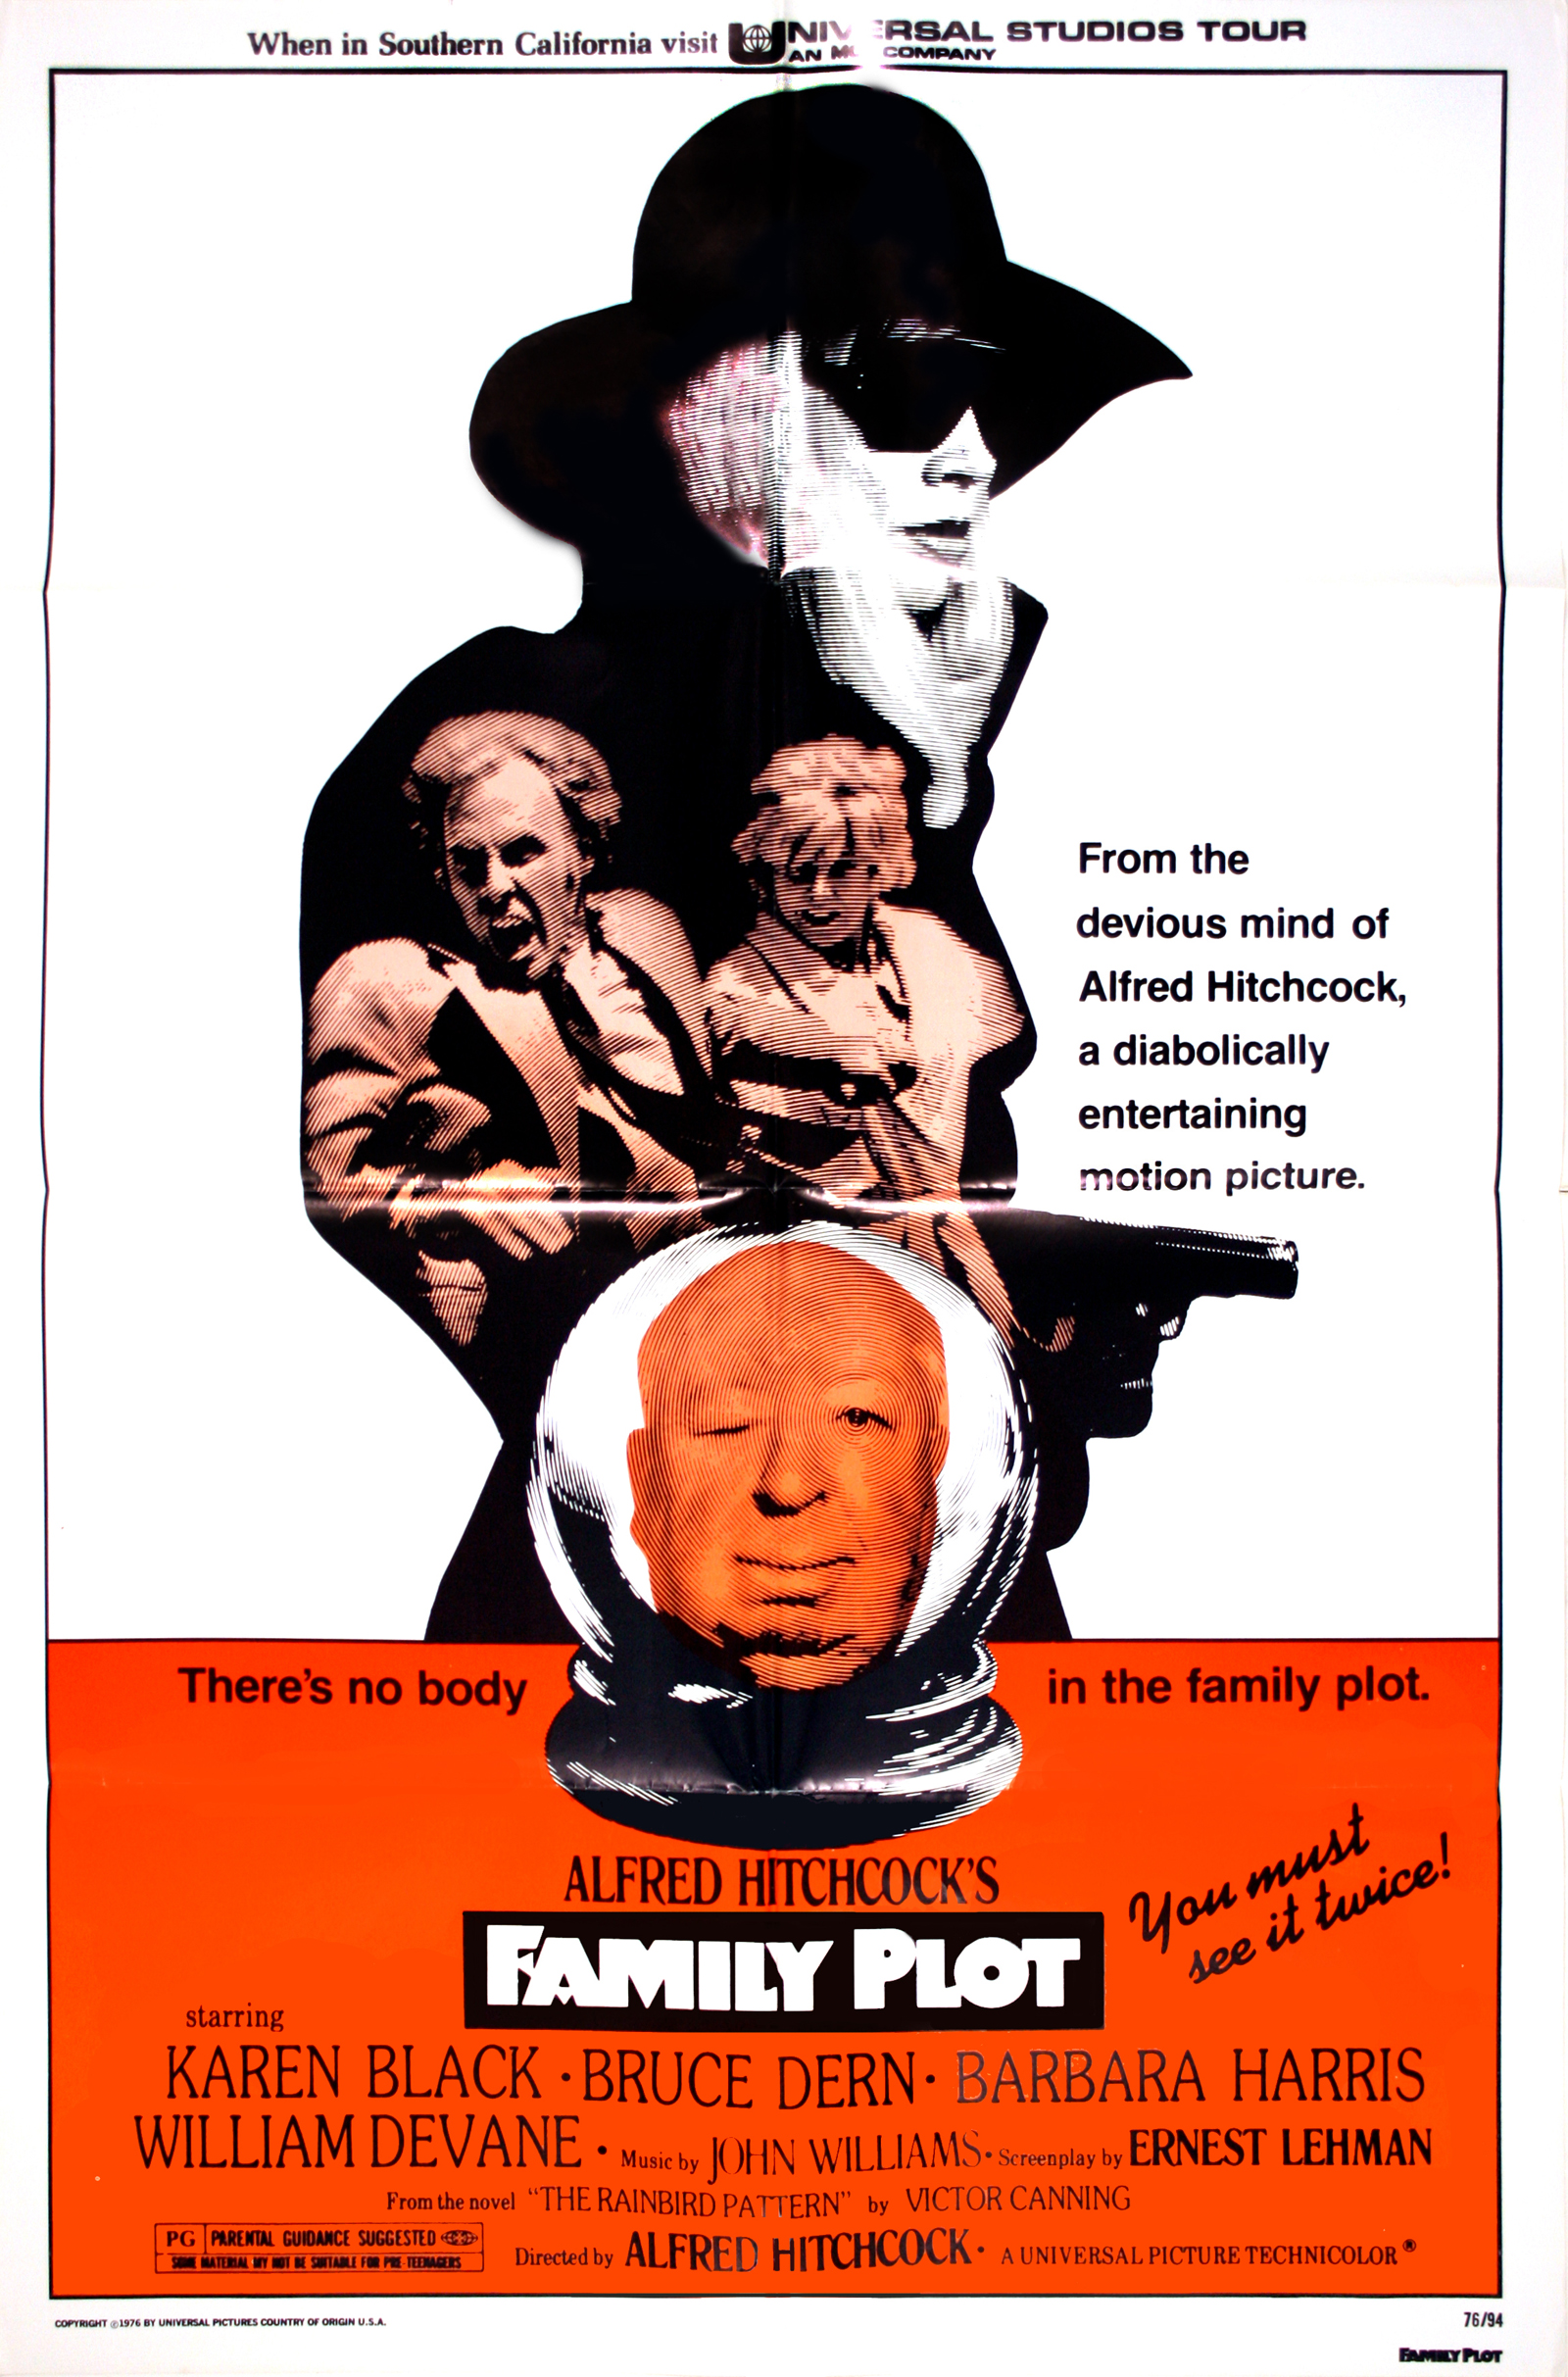 Hitchcock Conversations: “Family Plot” (1976)